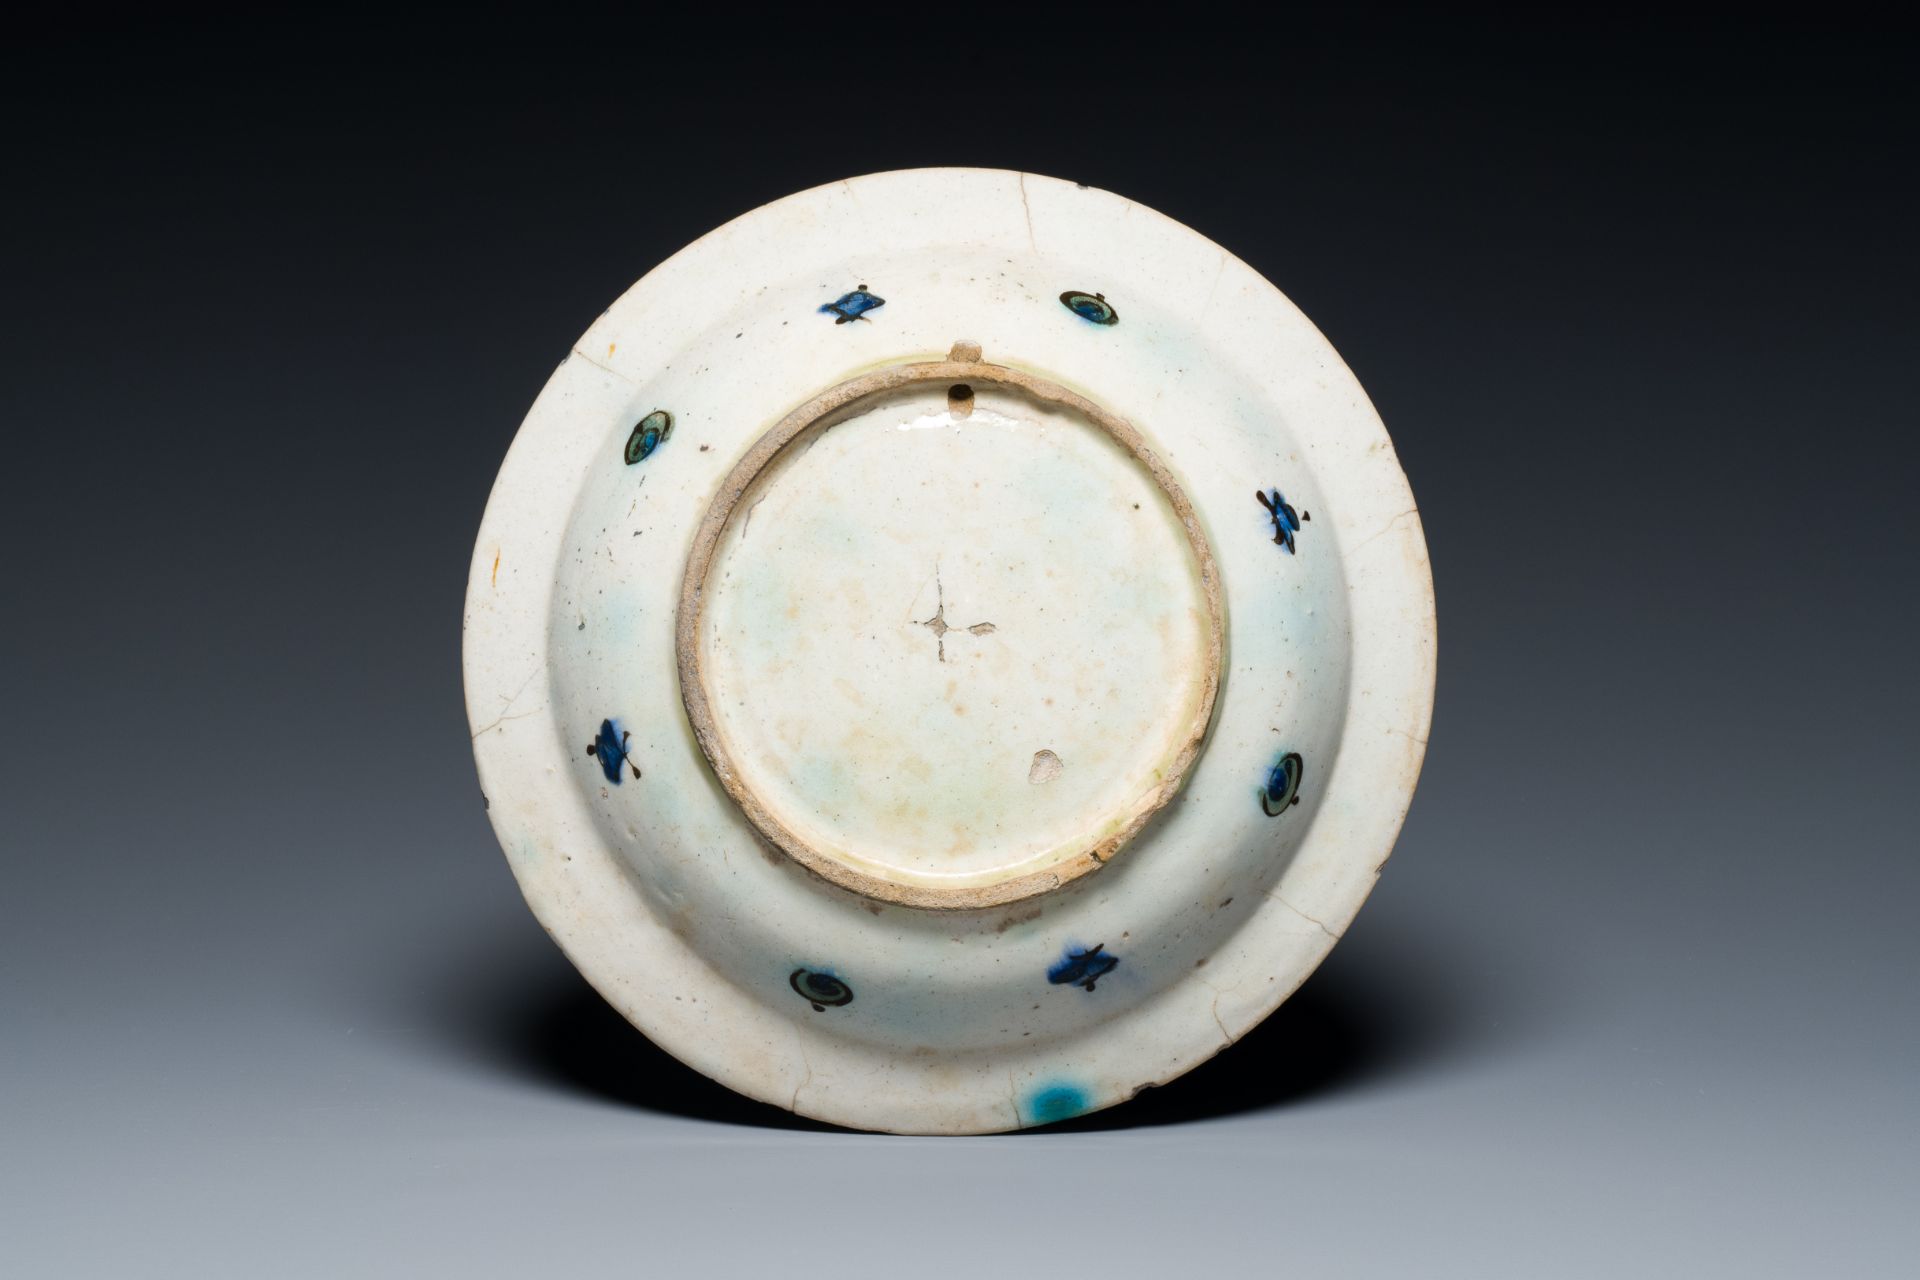 A polychrome Iznik pottery dish, Turkey, ca. 1600 - Image 2 of 2